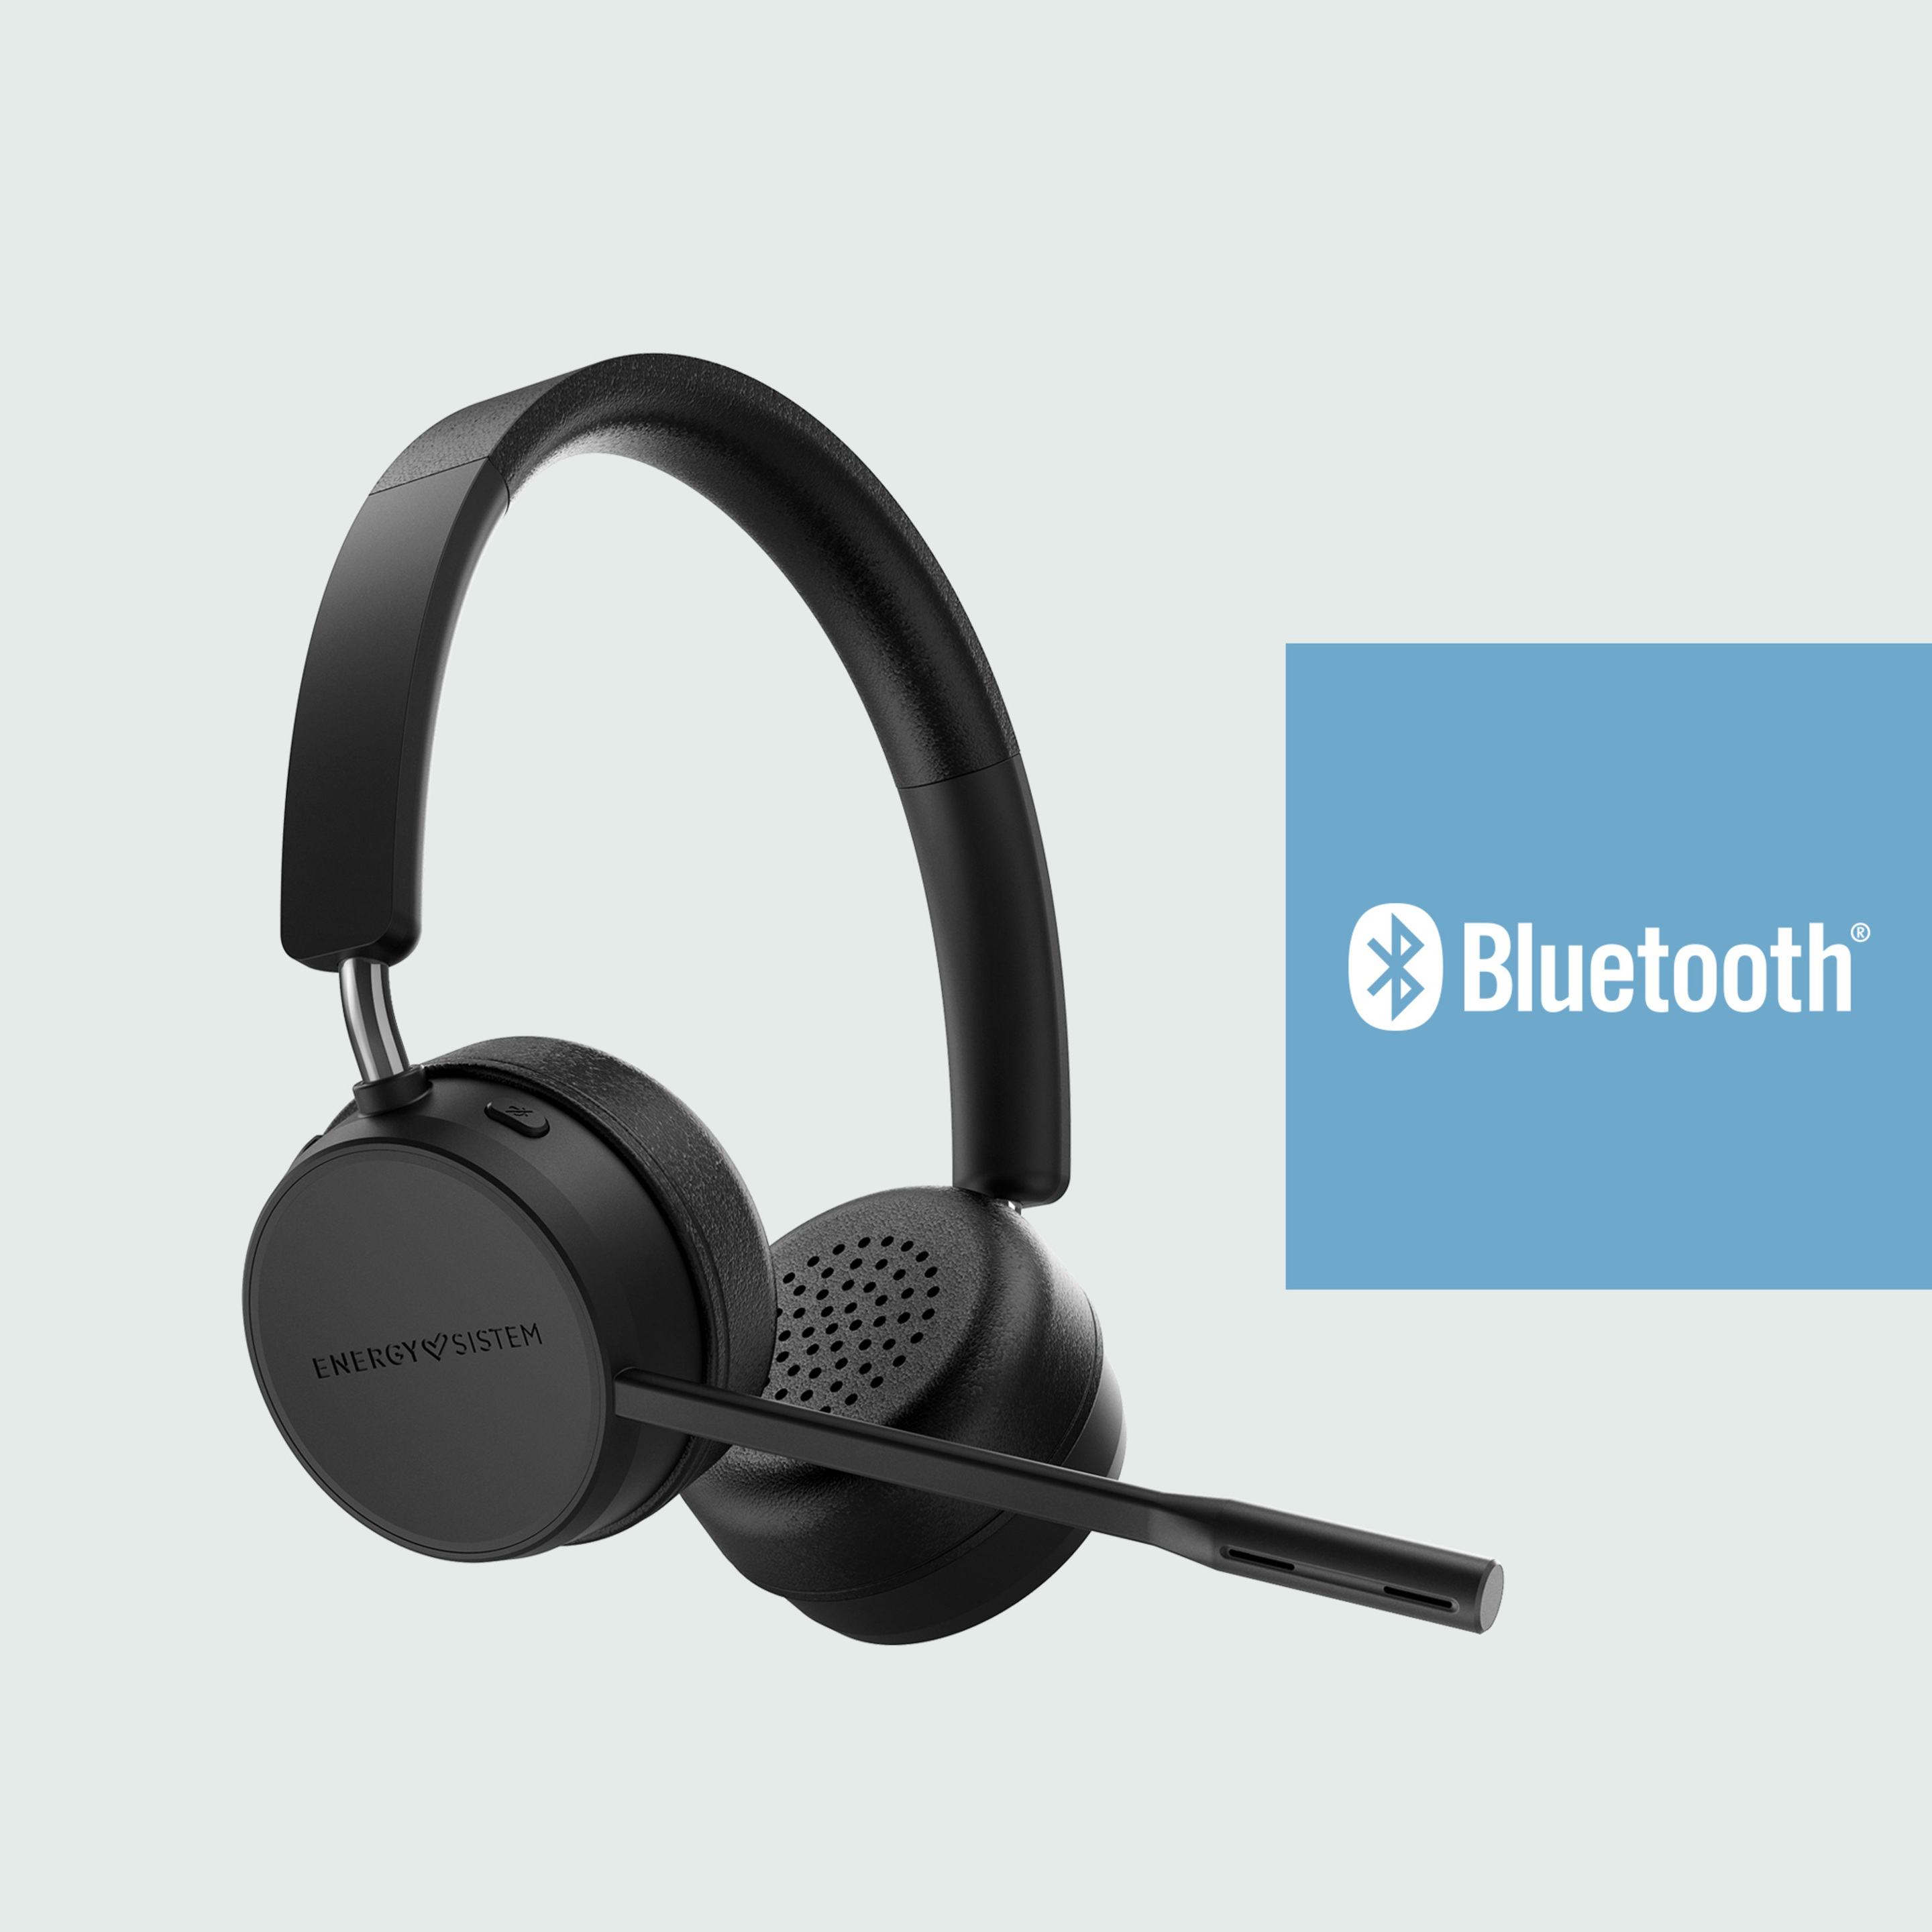 Auscultadores Bluetooth Energy Sistem Office 6 Hq Voice Calls, Quick Charge